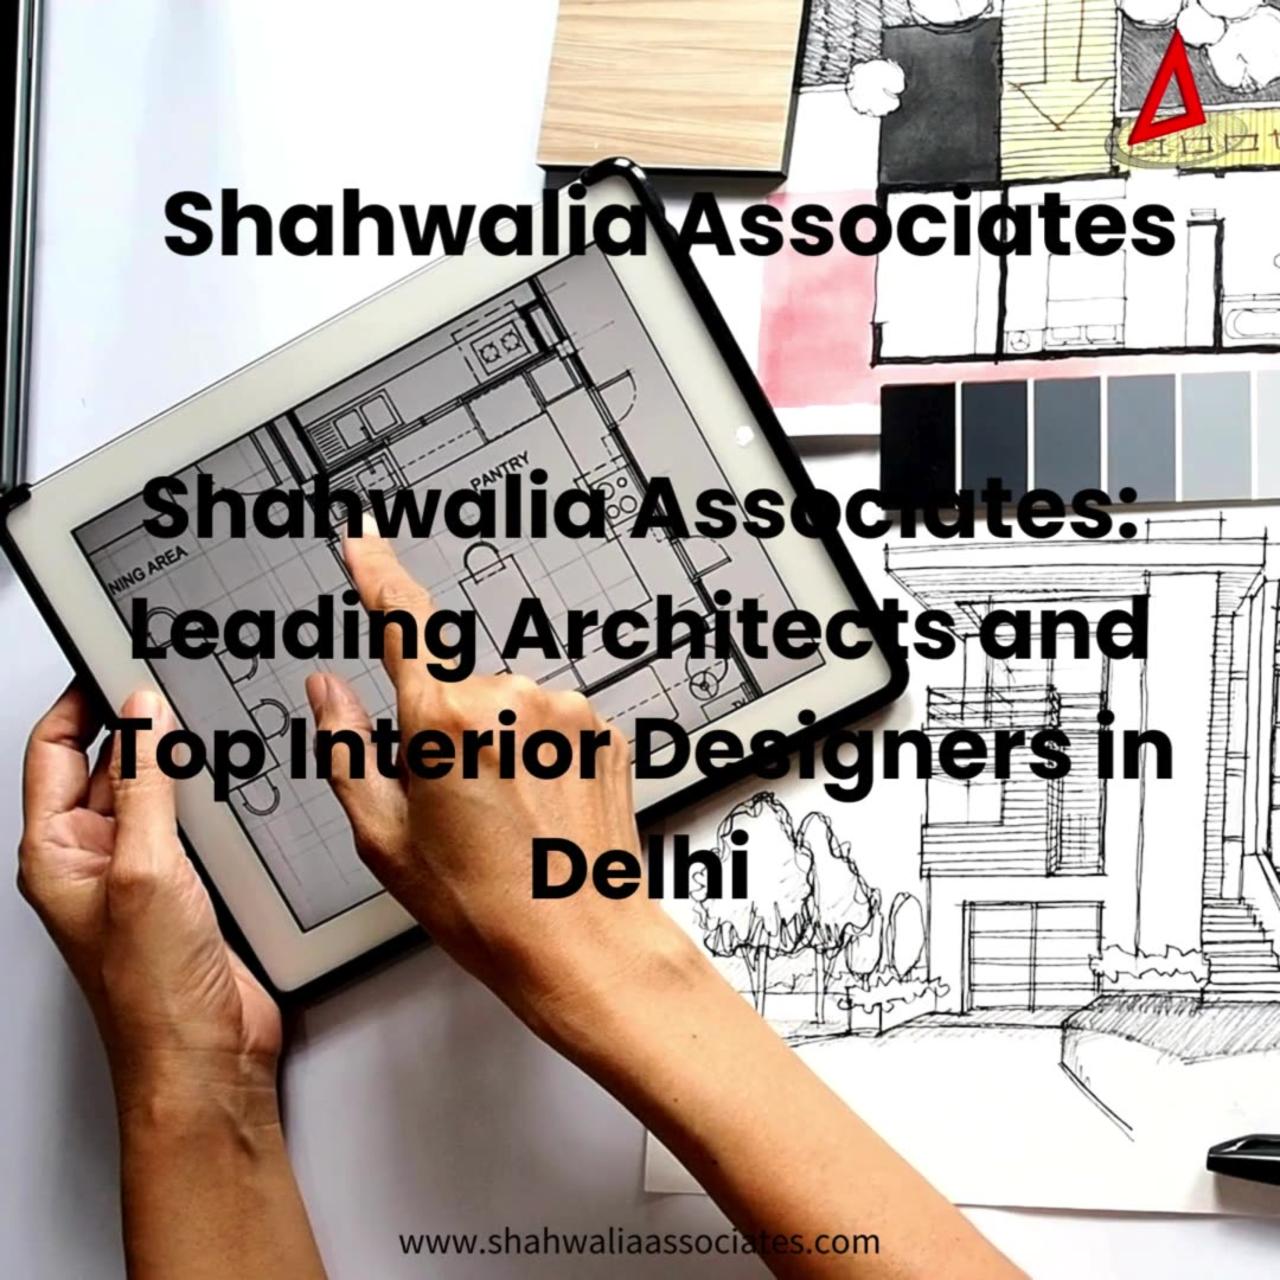 Architects in Delhi Best Interior Designers in Delhi Shahwalia Associates.